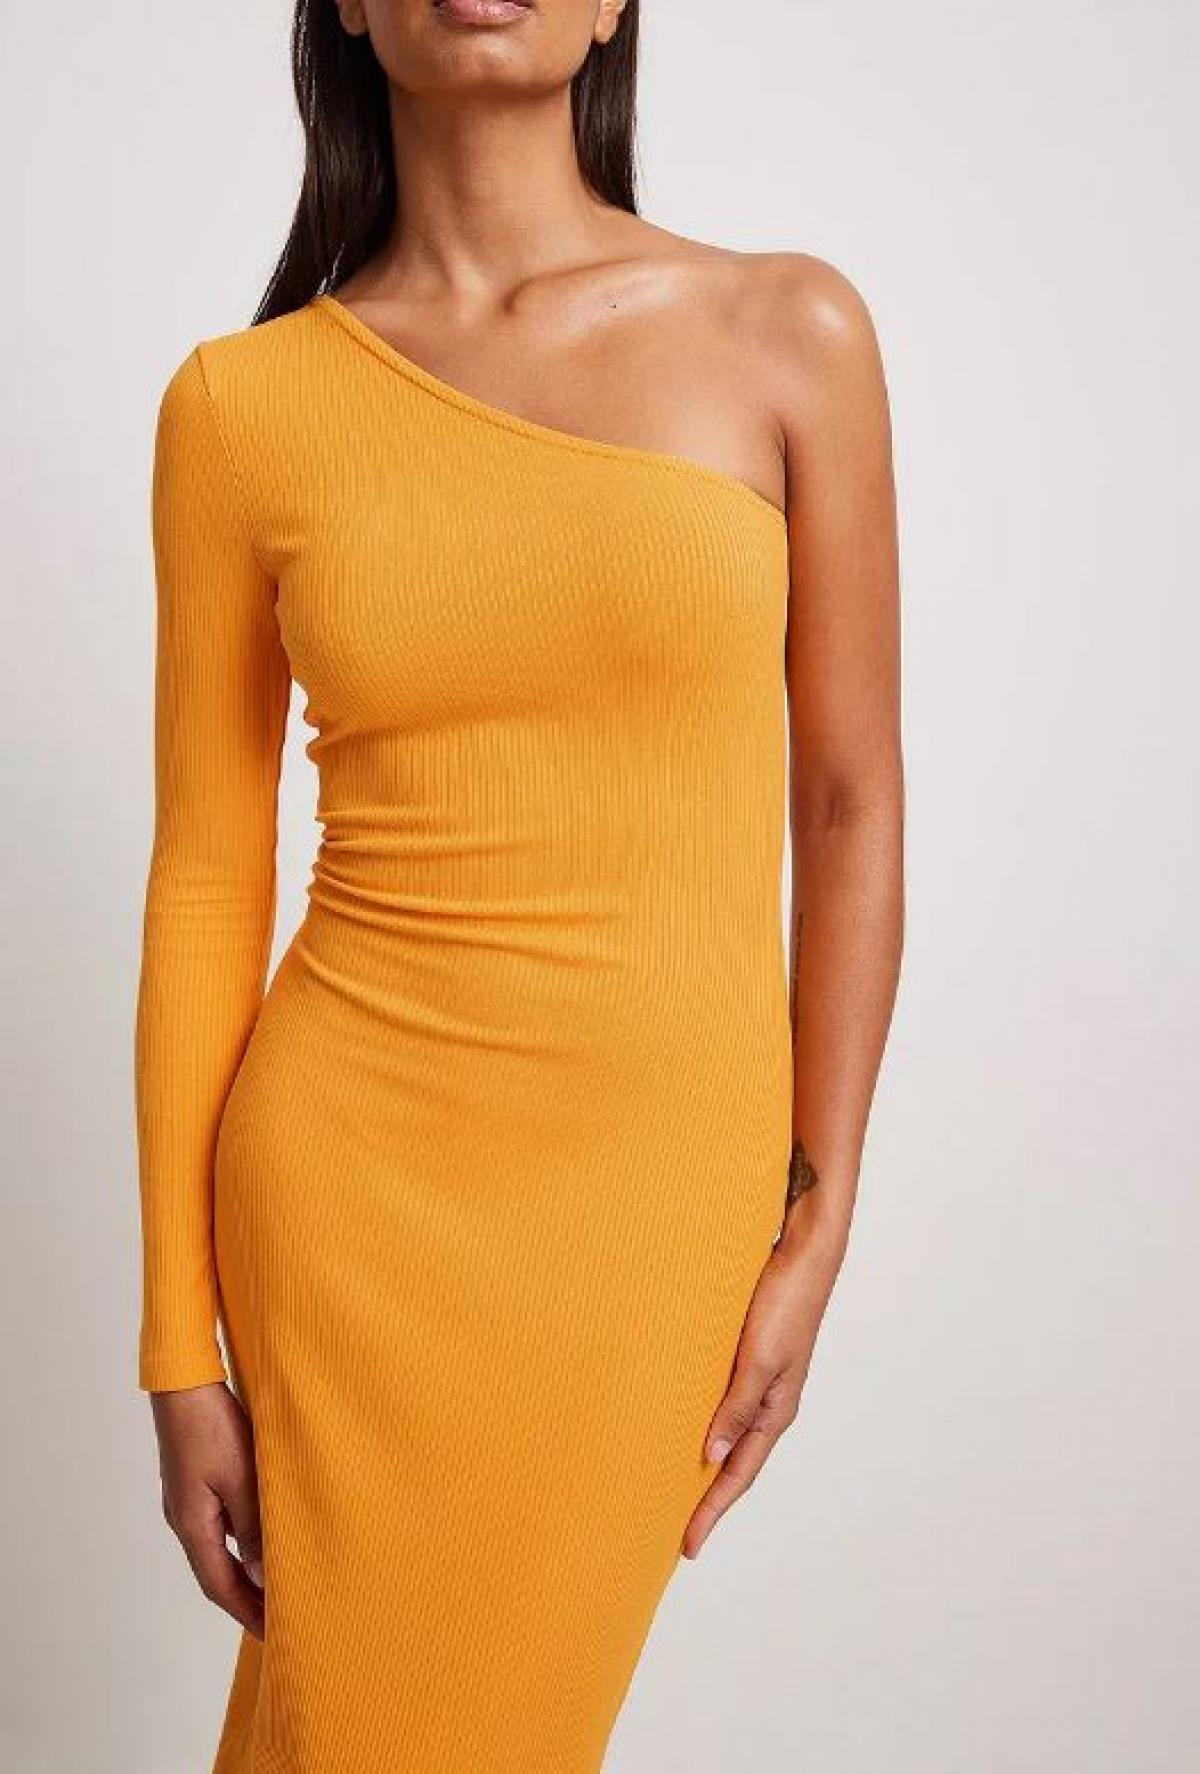 One-sleeve jurk in elastische oranje stof met ribbels